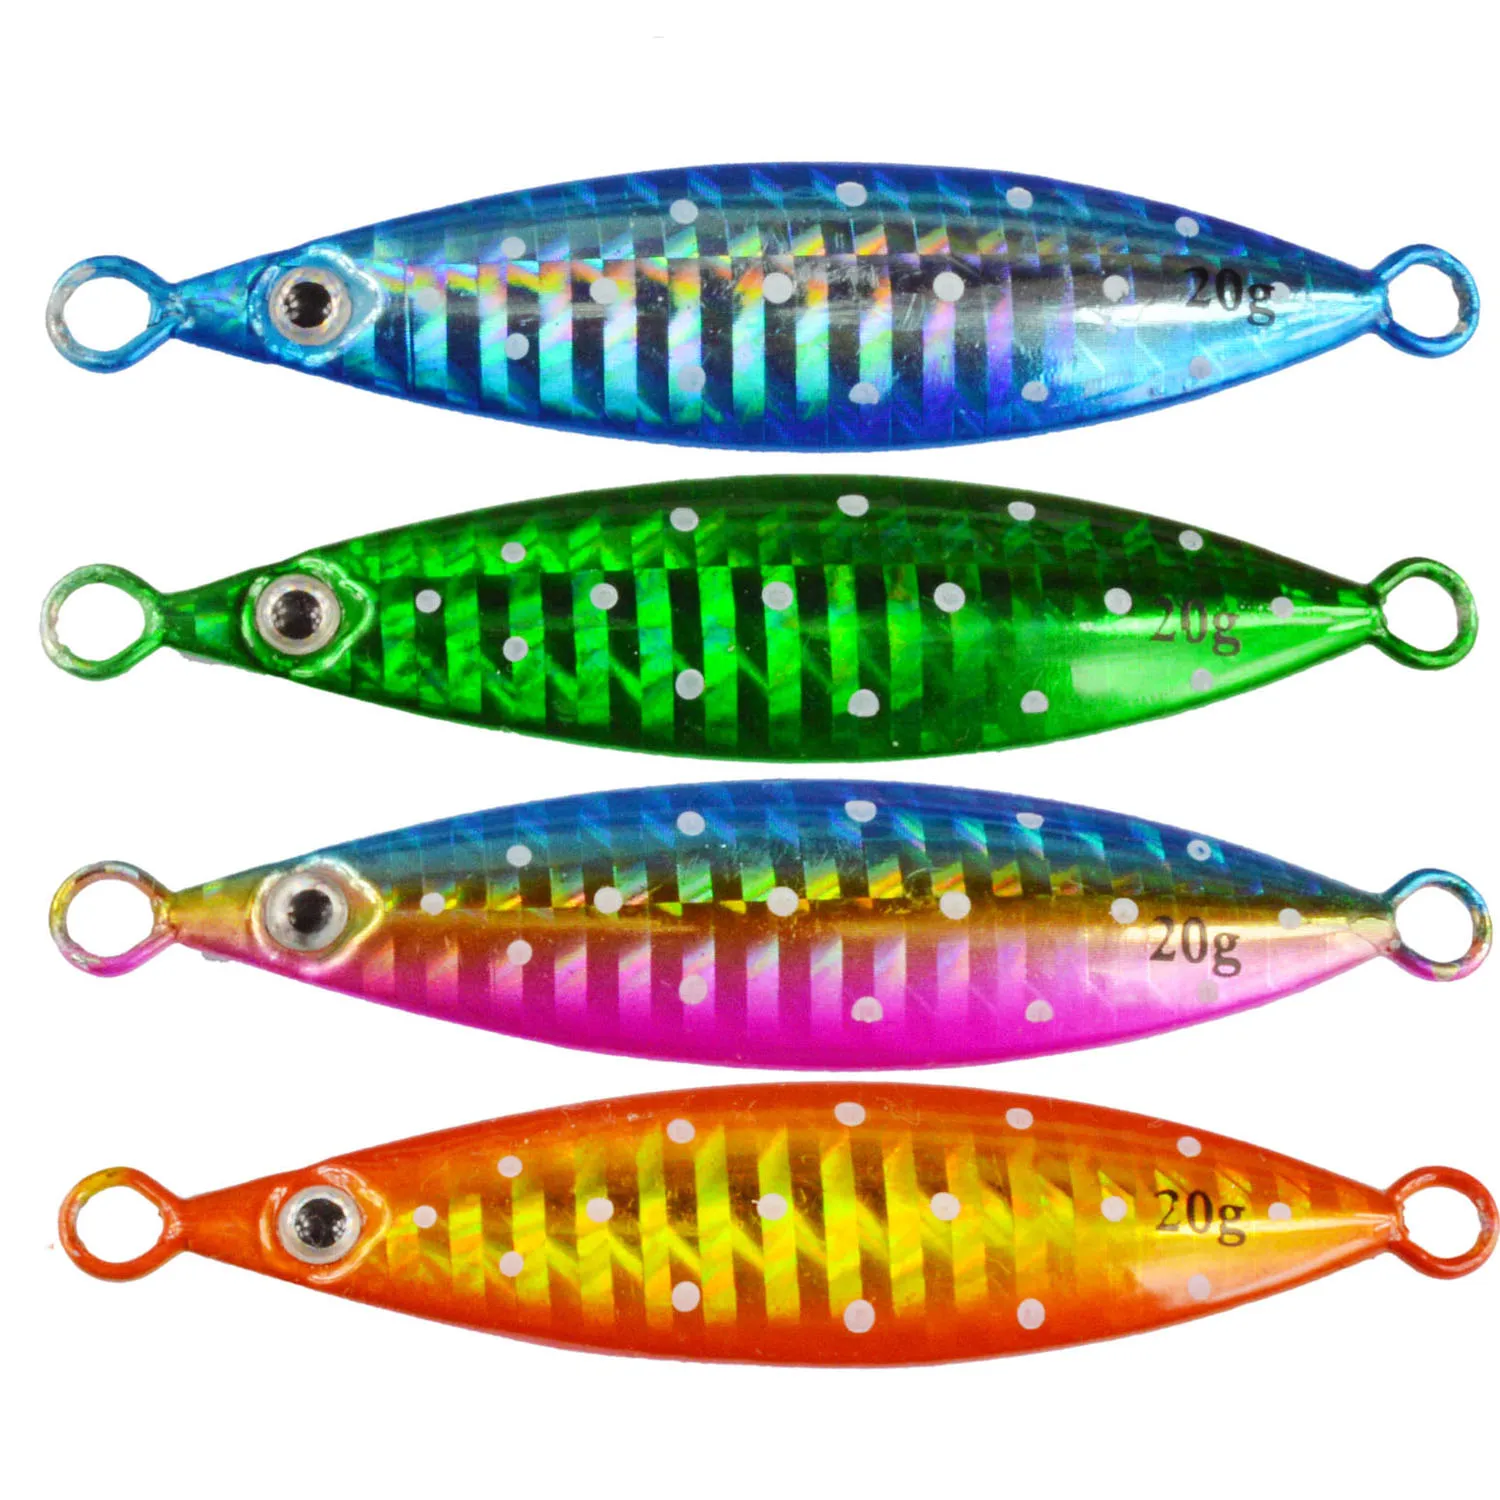 

VIB Metal Jig 20g/40g/60g/80g/100g/150g/200g Fishing Lead Jigging Lures Metal Slow Sinkers Hard Bait Fish Hooks, 4 colors